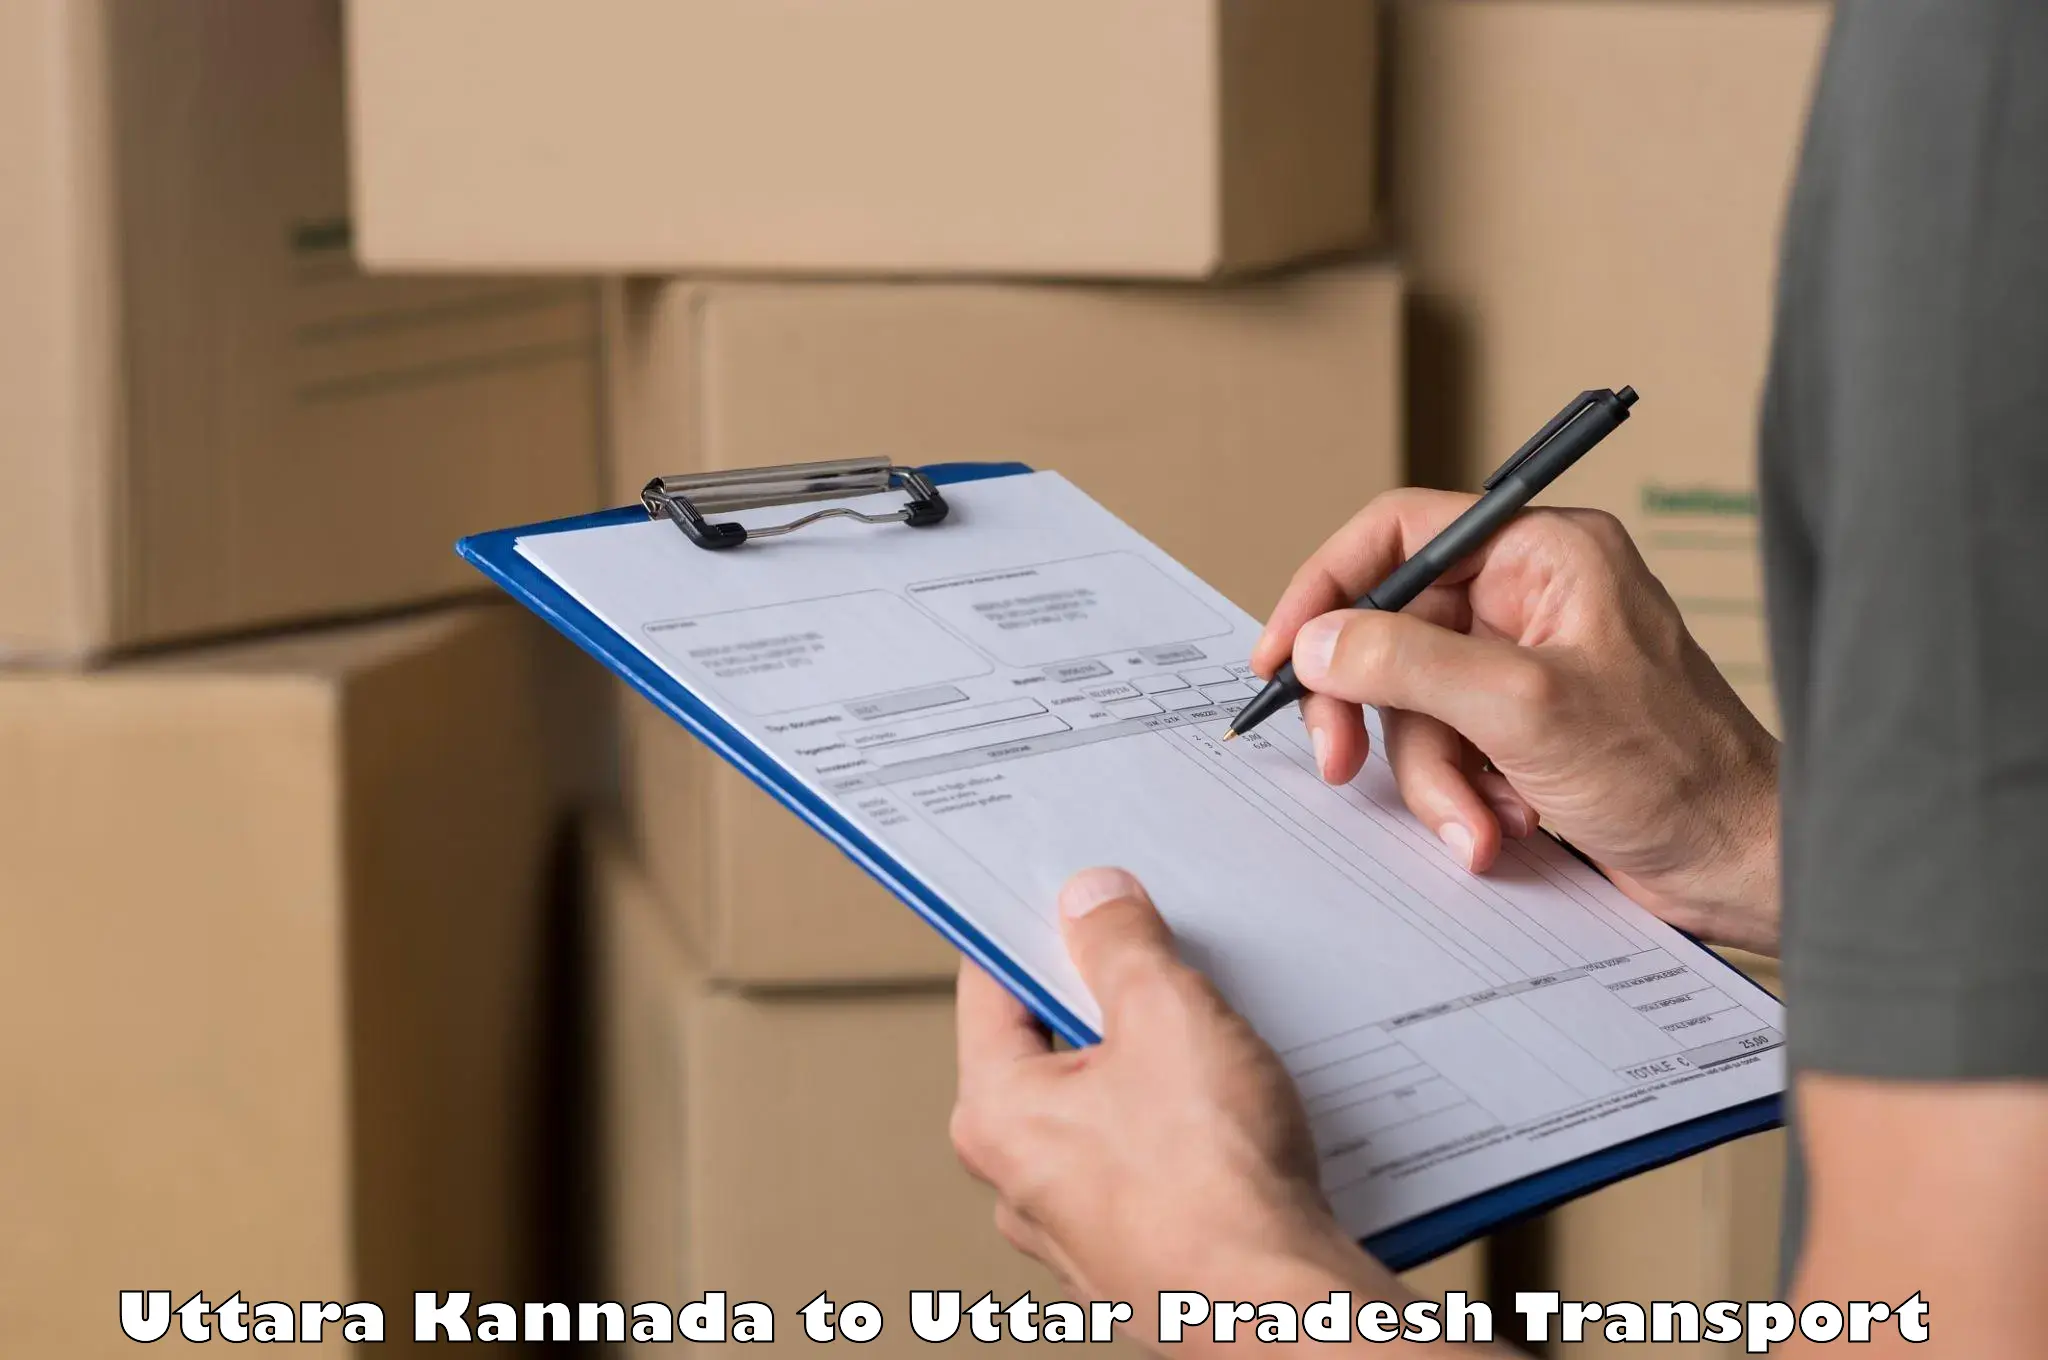 Goods delivery service Uttara Kannada to Noida